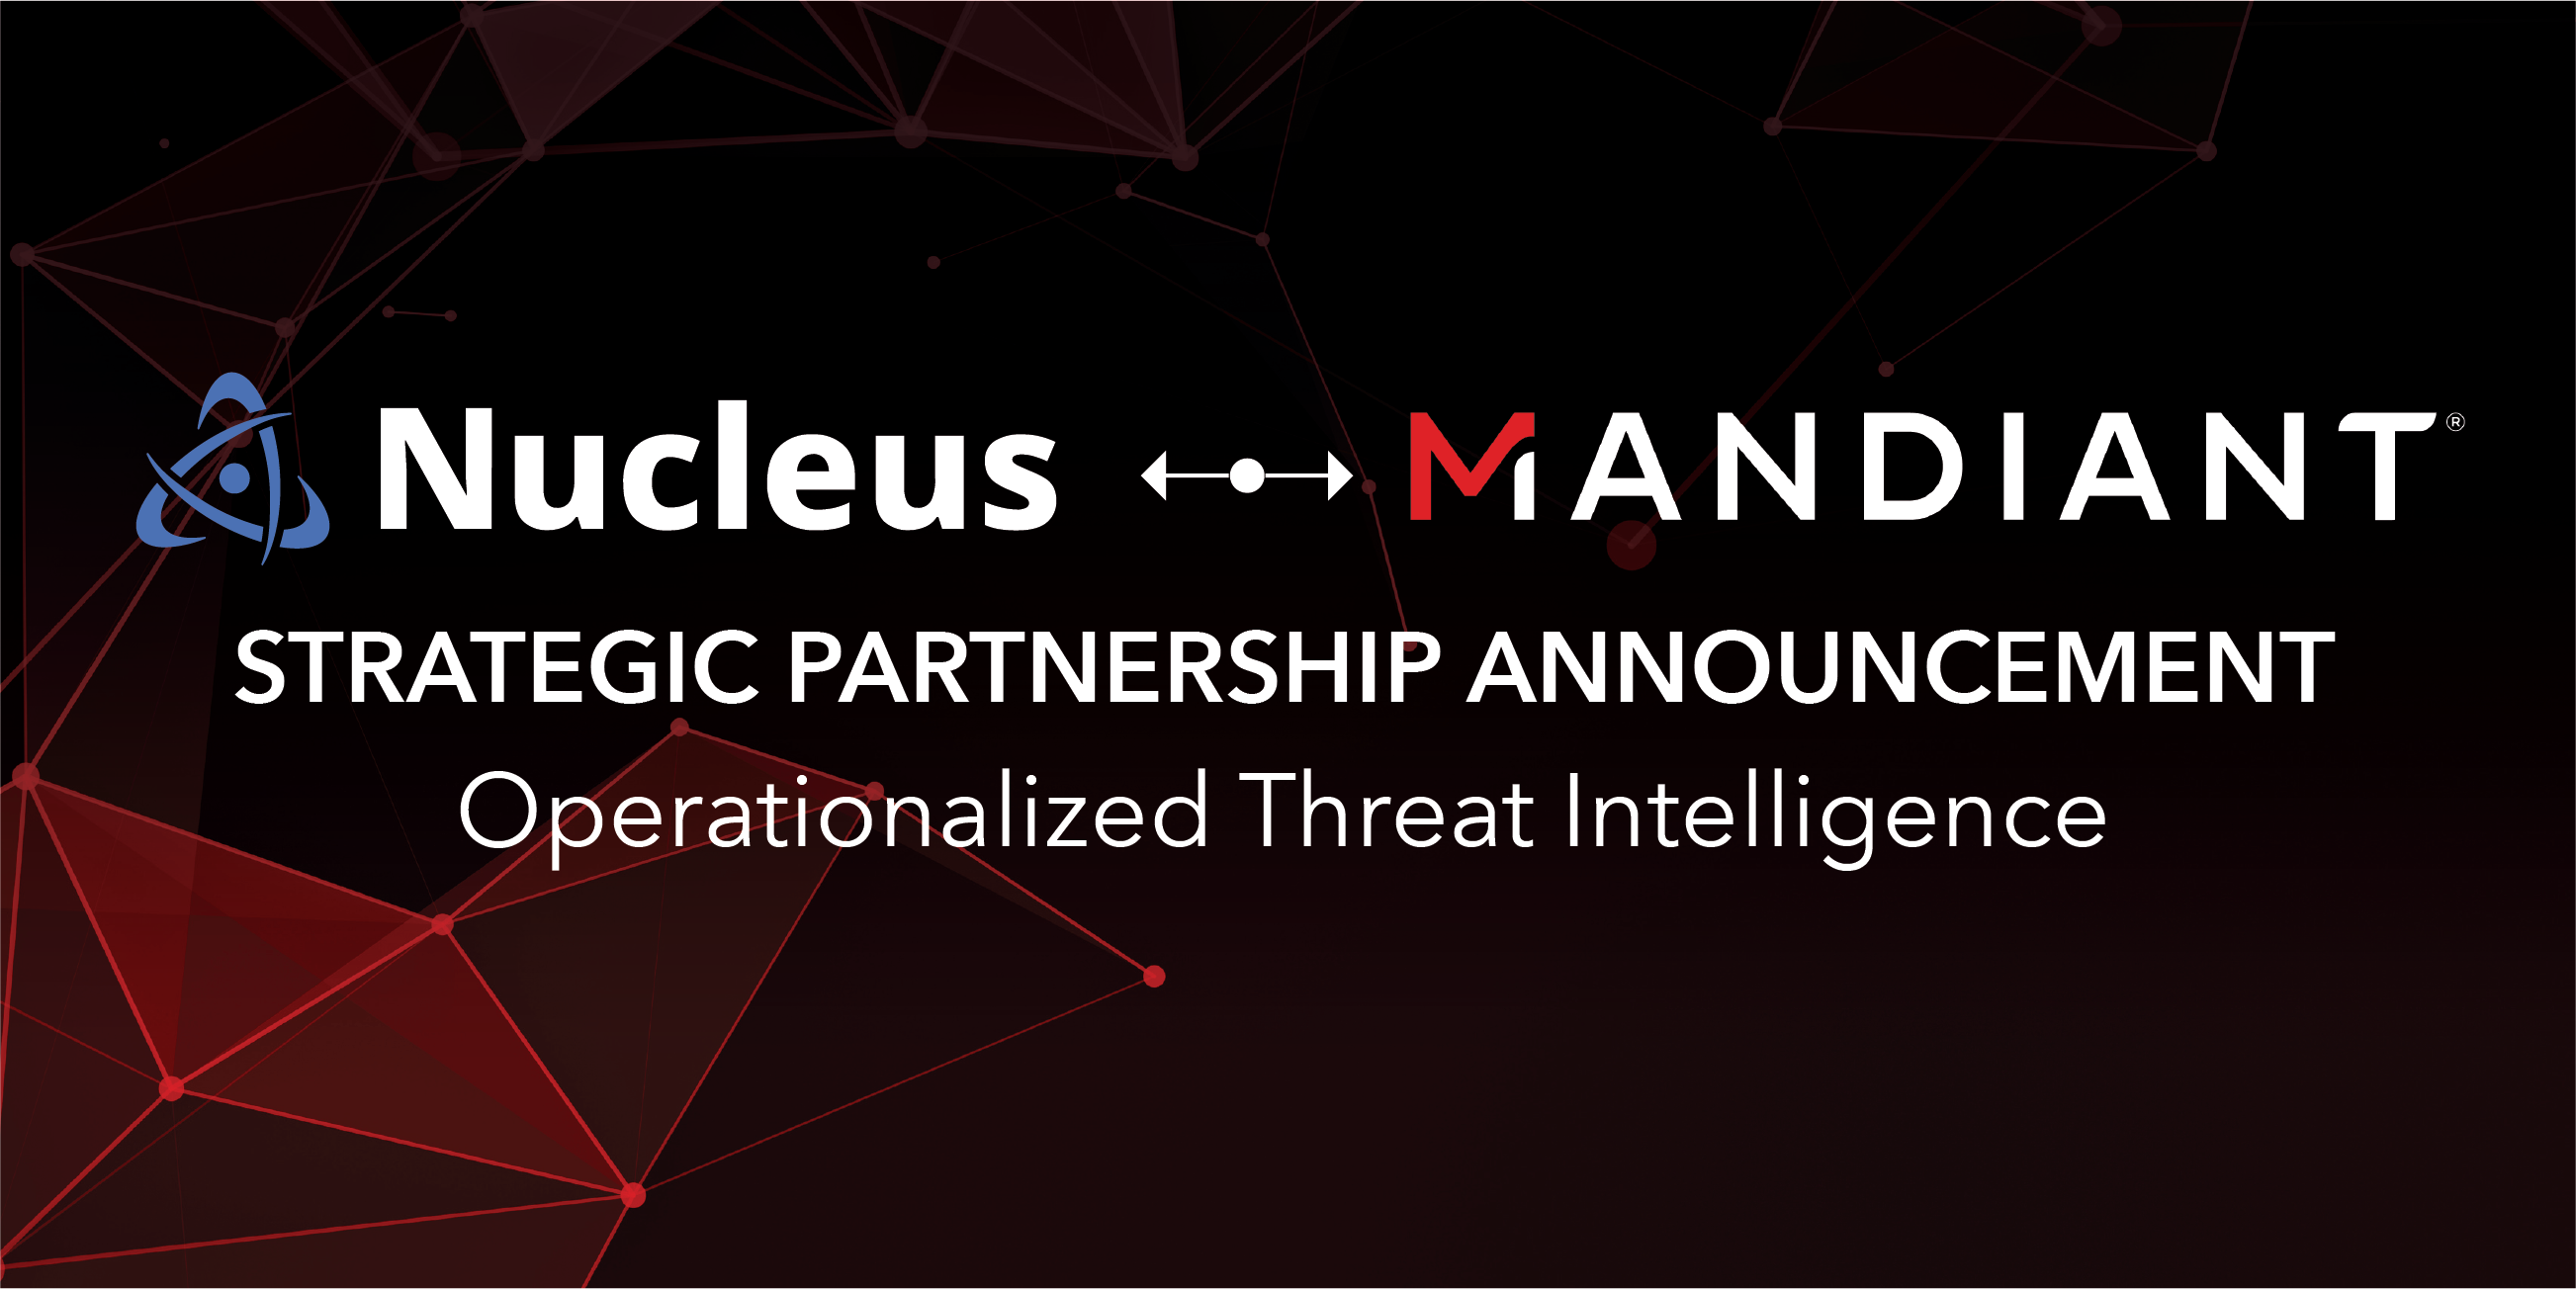 Nucleus and Mandiant Partnership